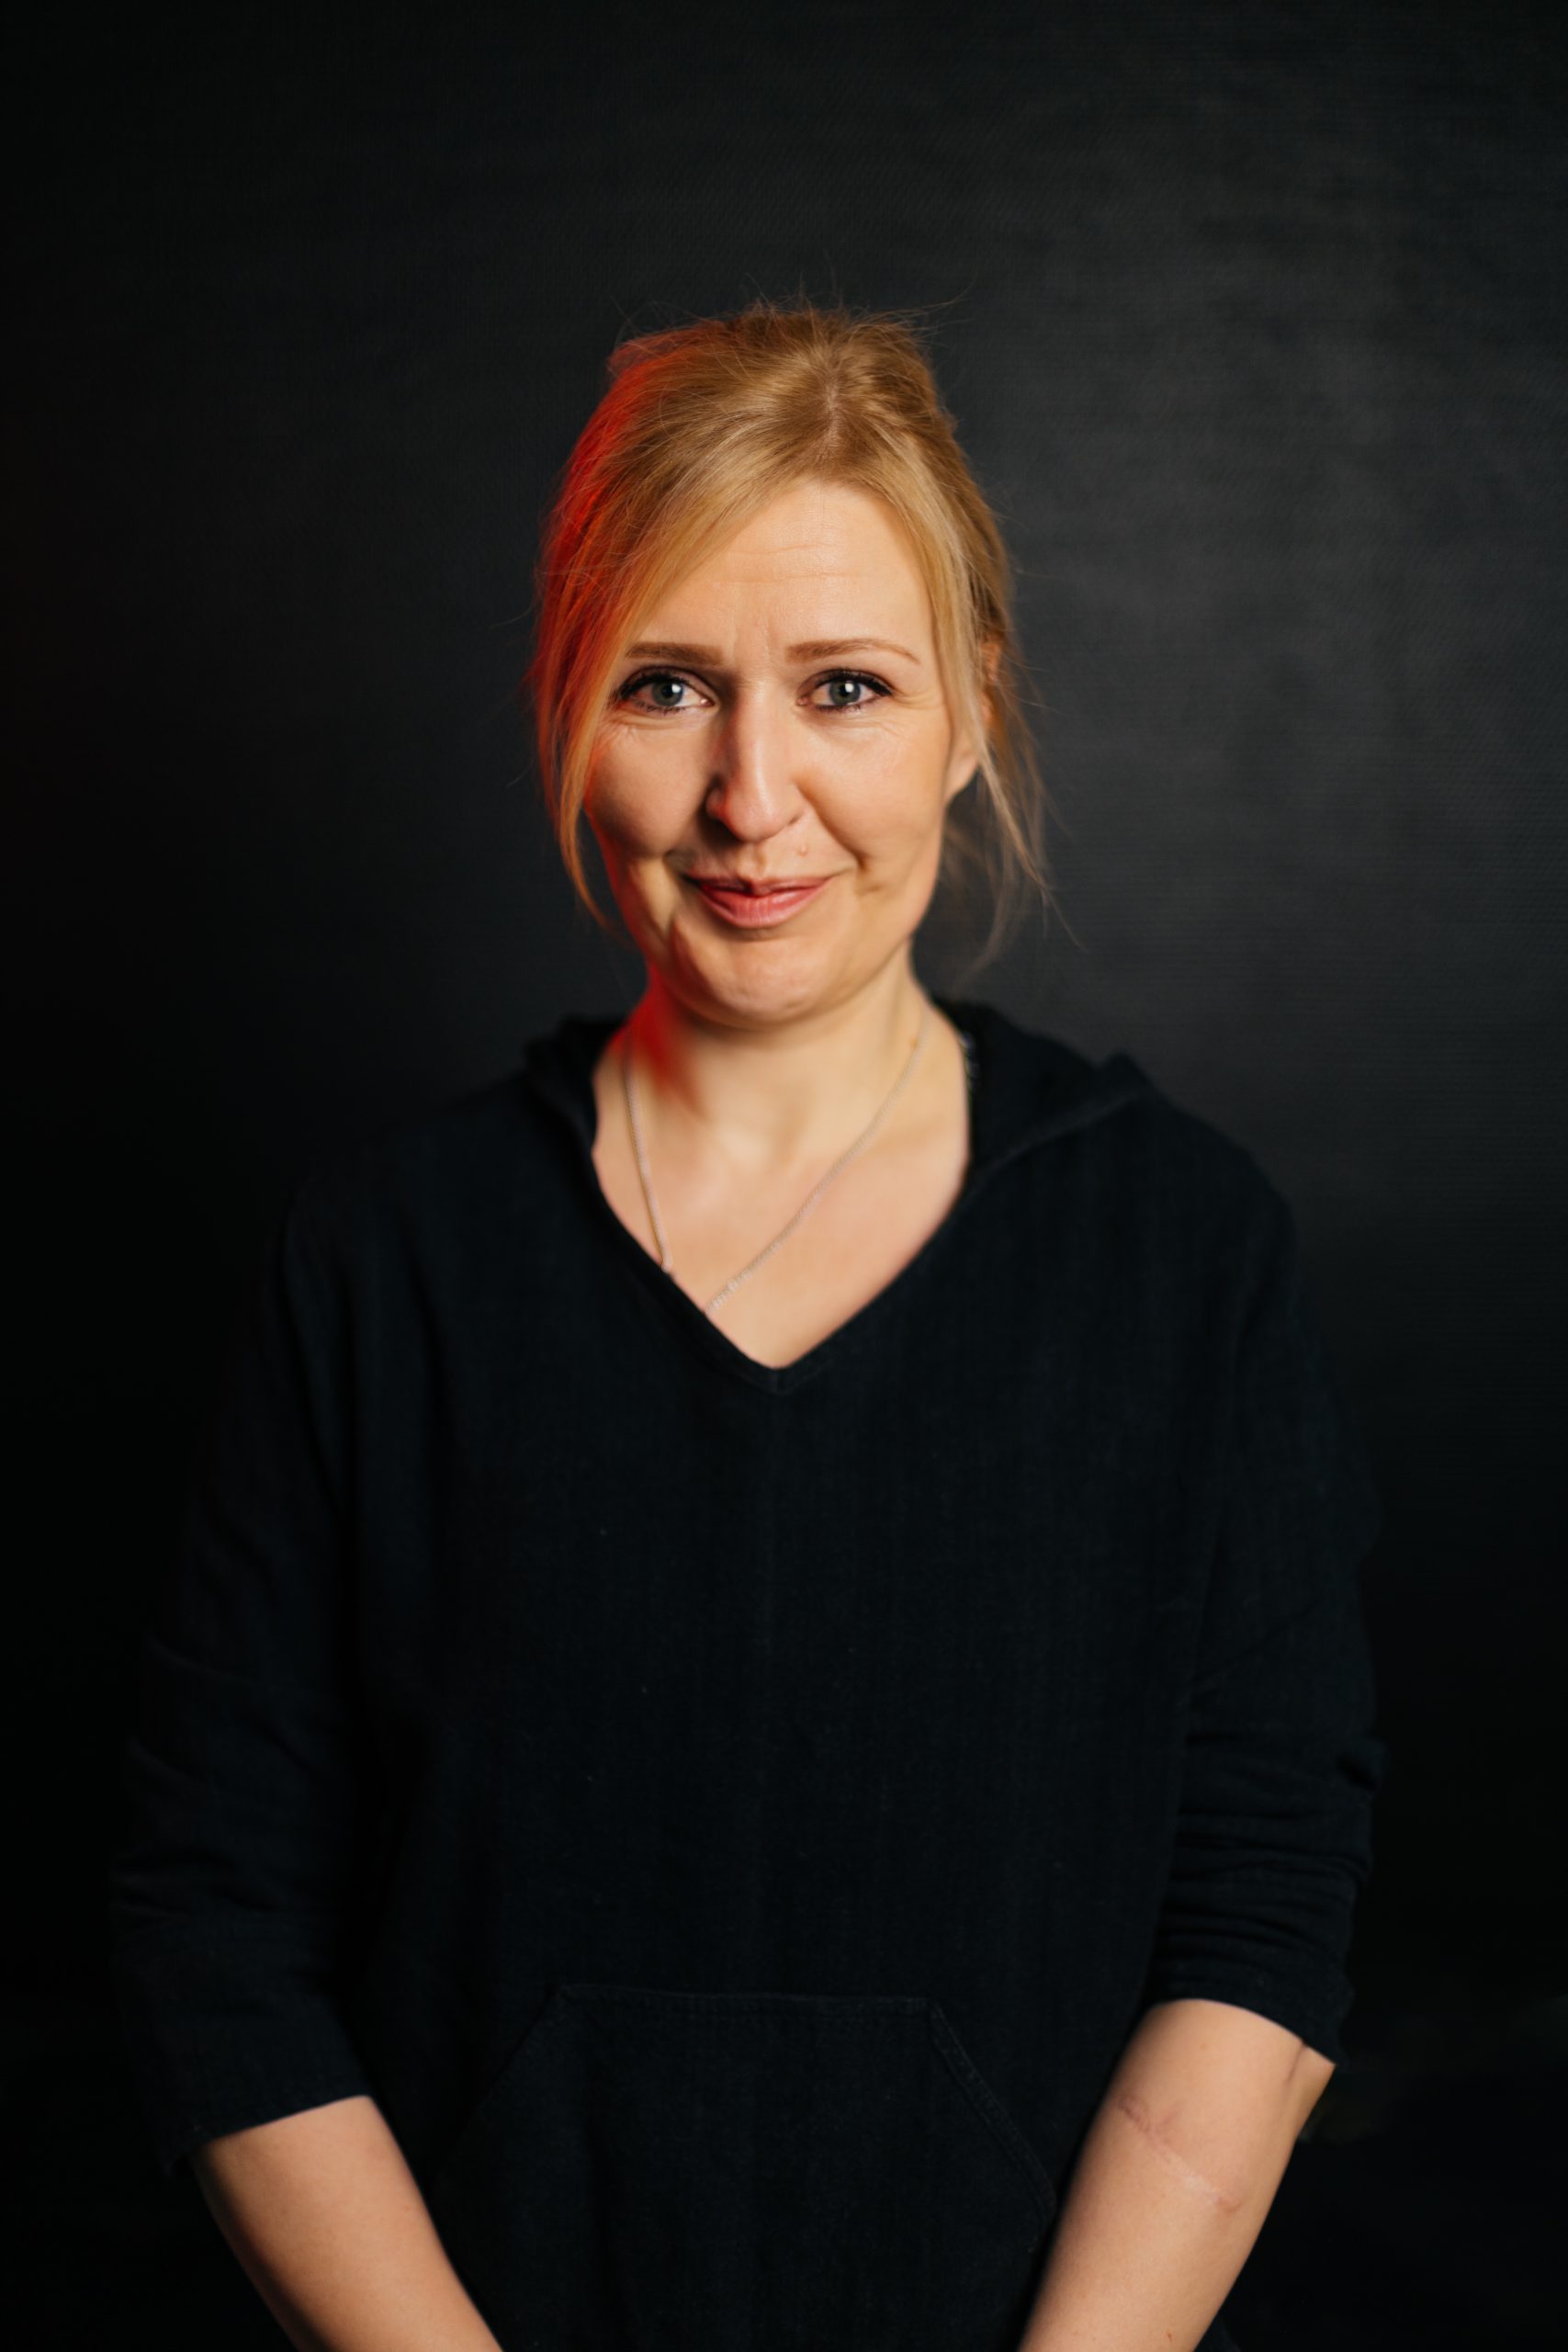 Mia Leskinen